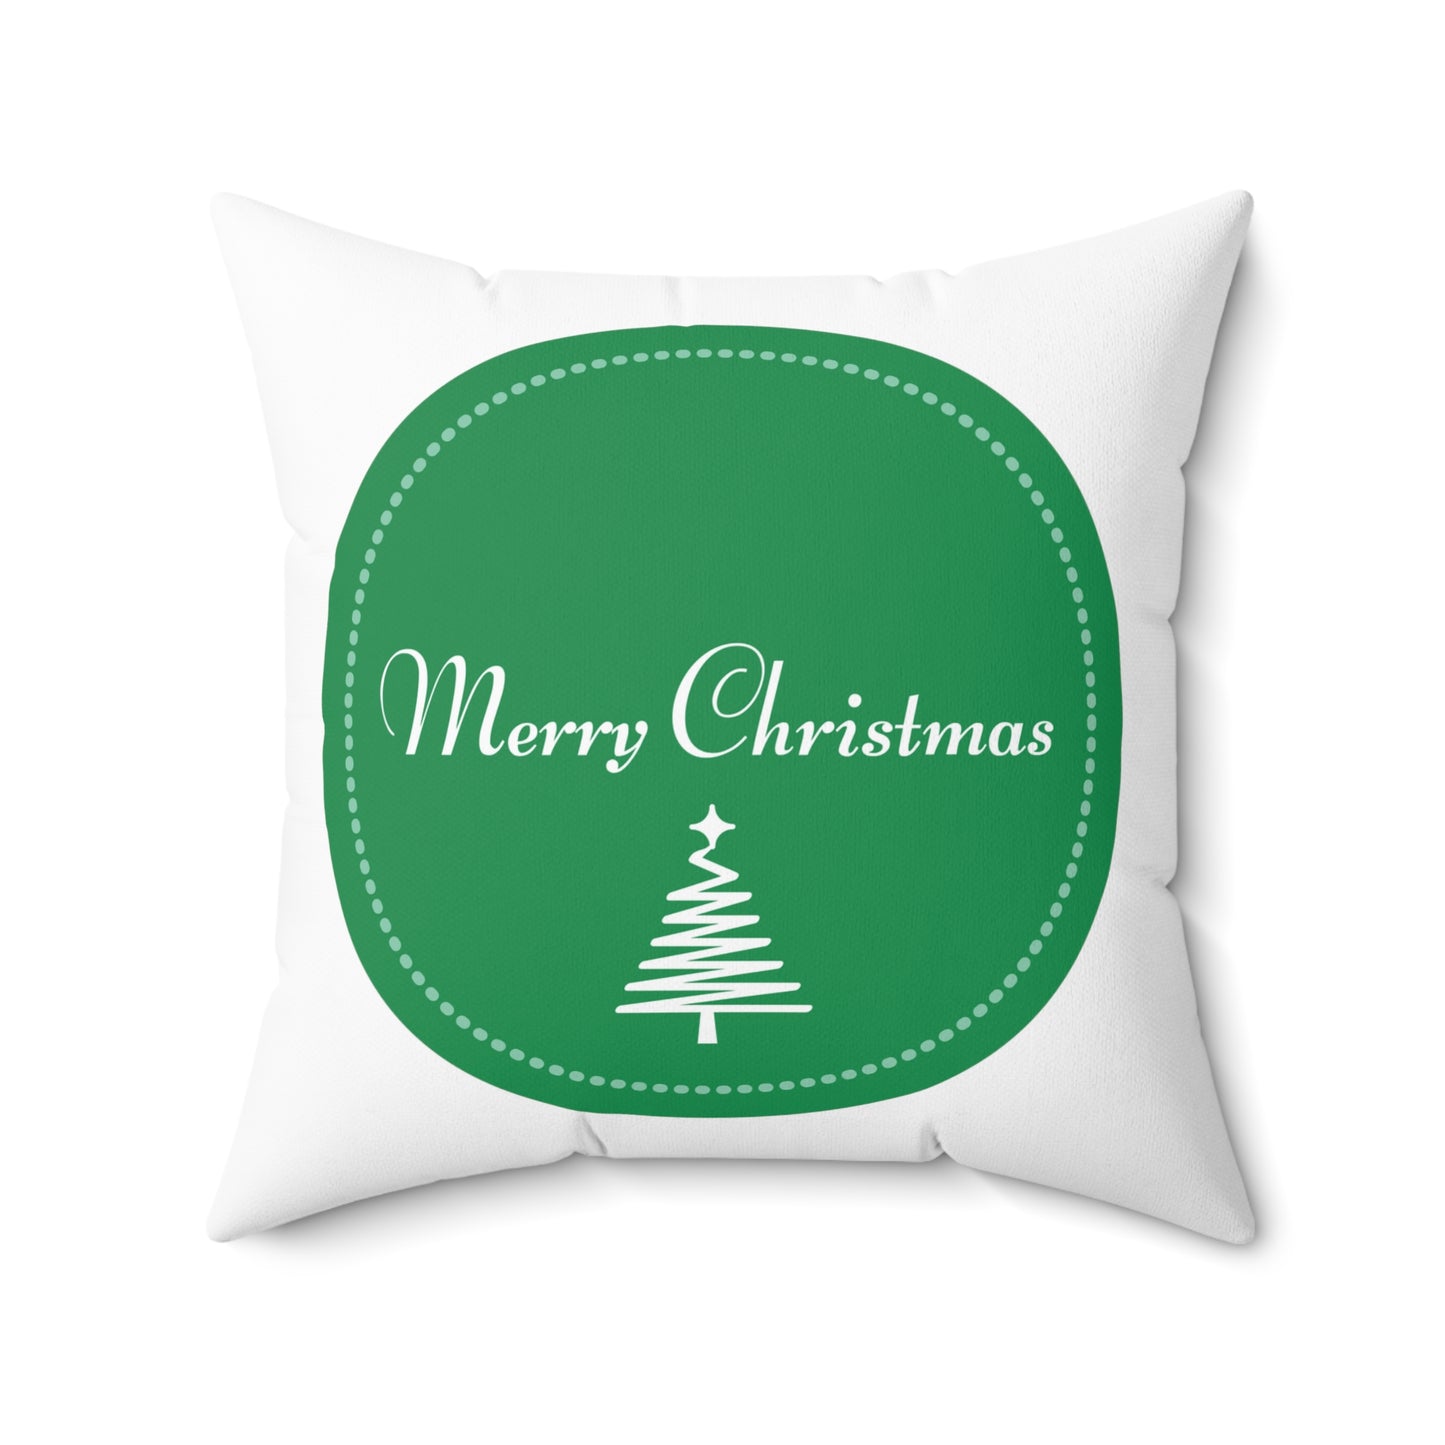 Merry Christmas Green Spun Polyester Square Pillow